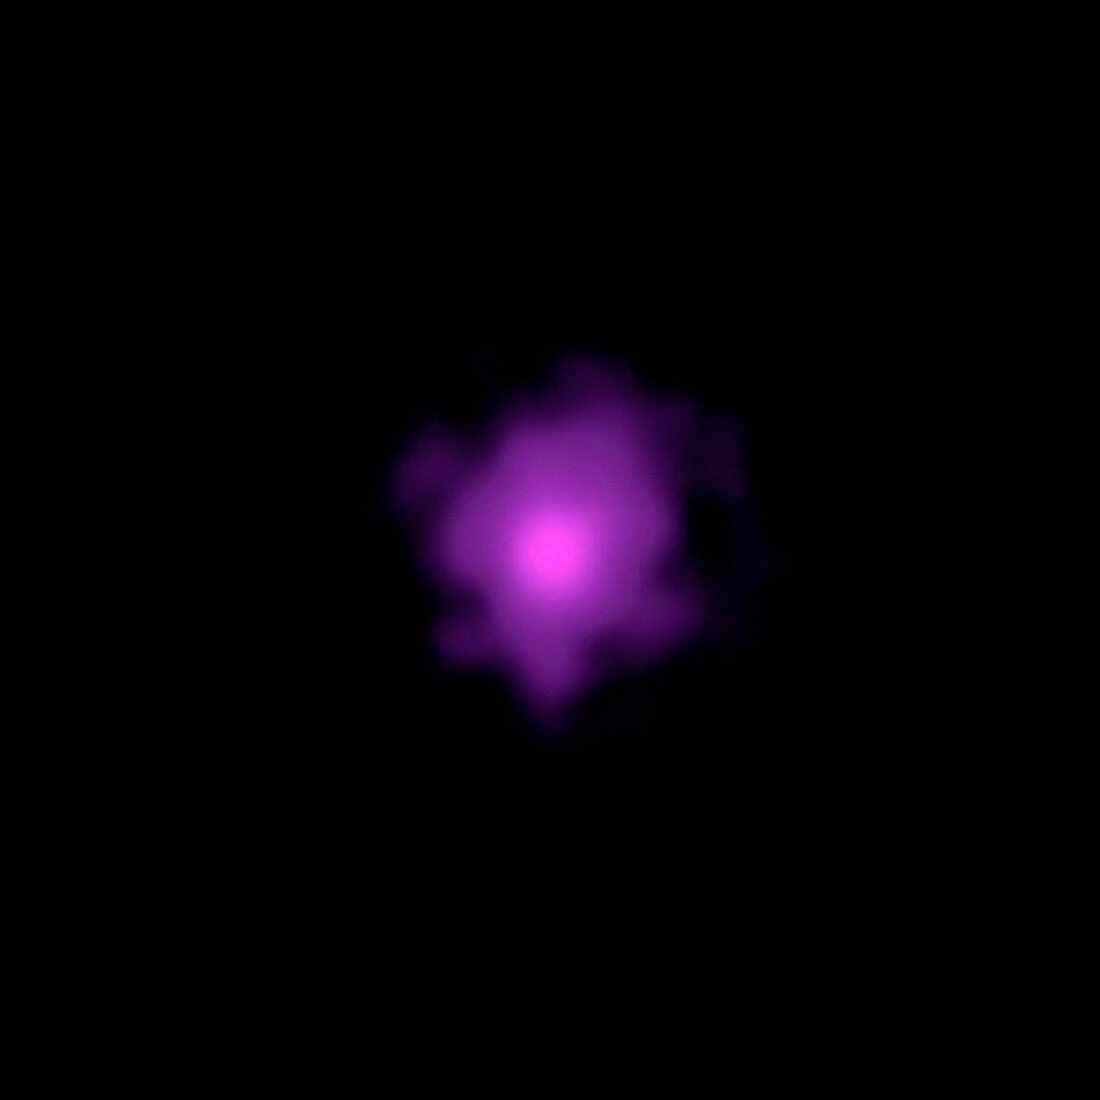 Pulsar in M82, NuSTAR image